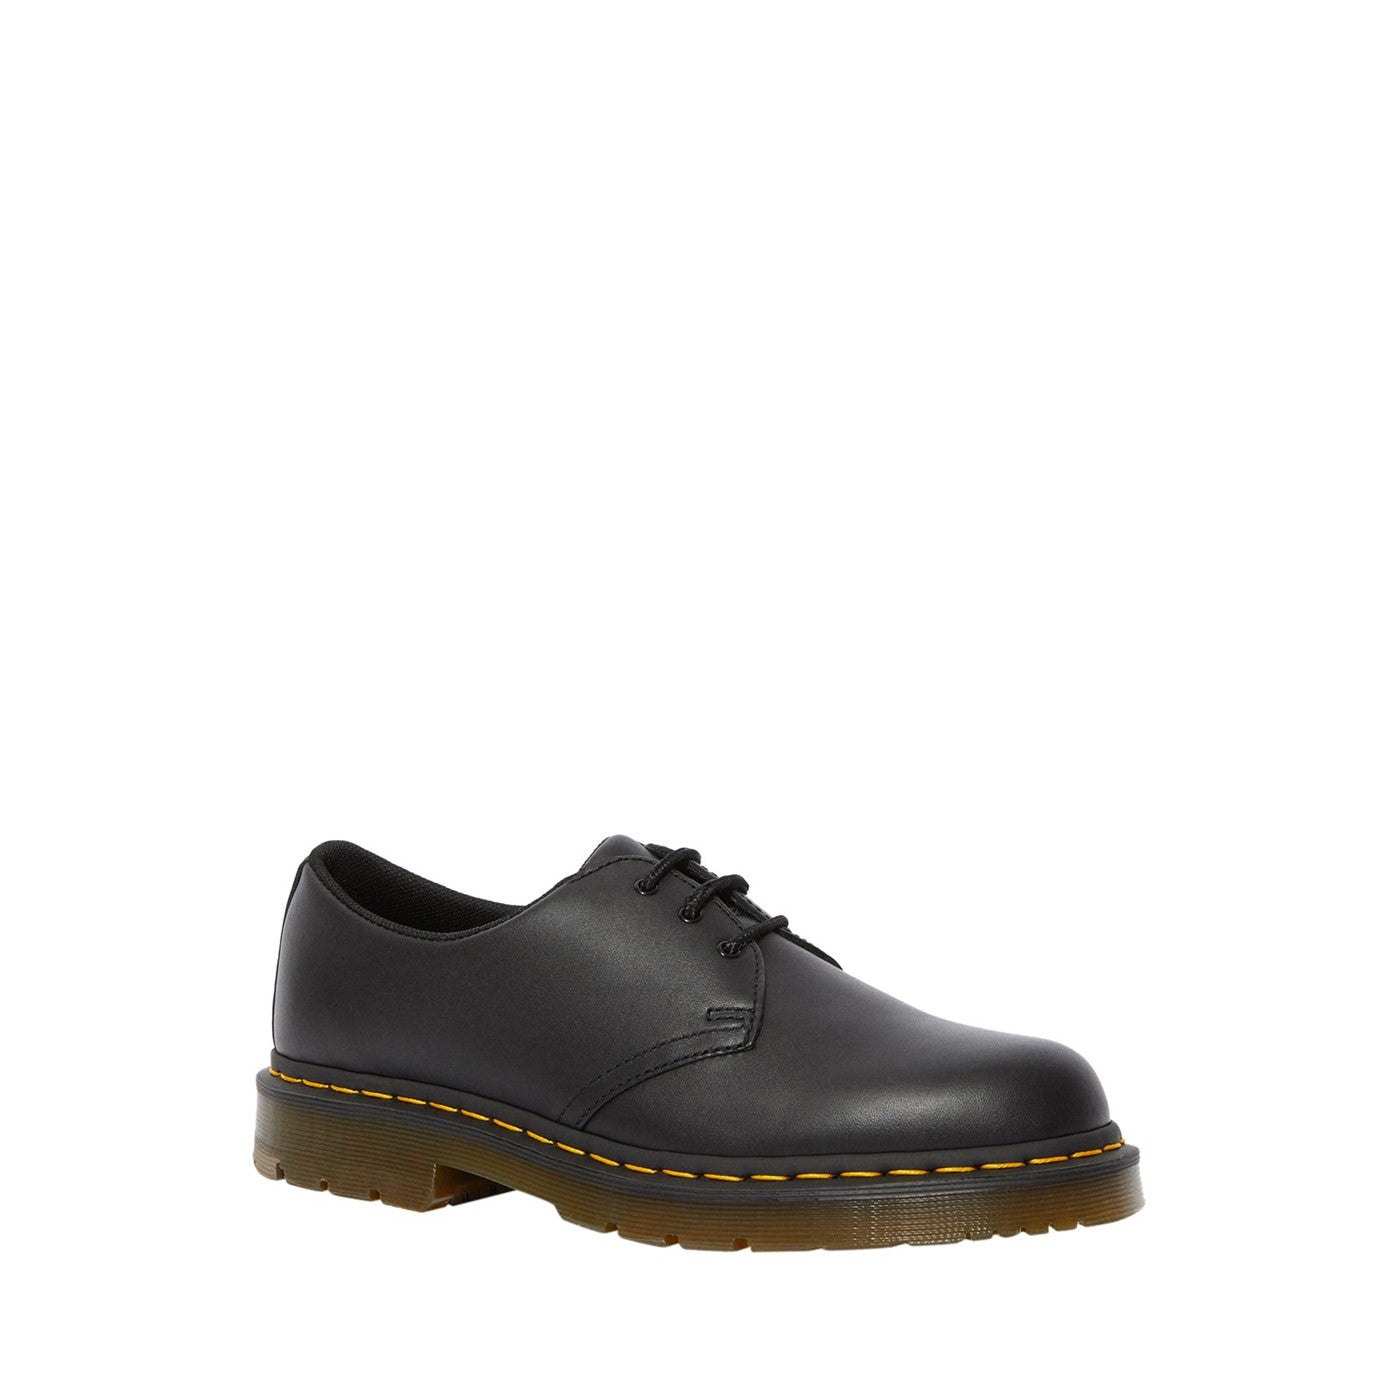 Men's Dr Martens 1461 Slip Resistant Leather Shoes